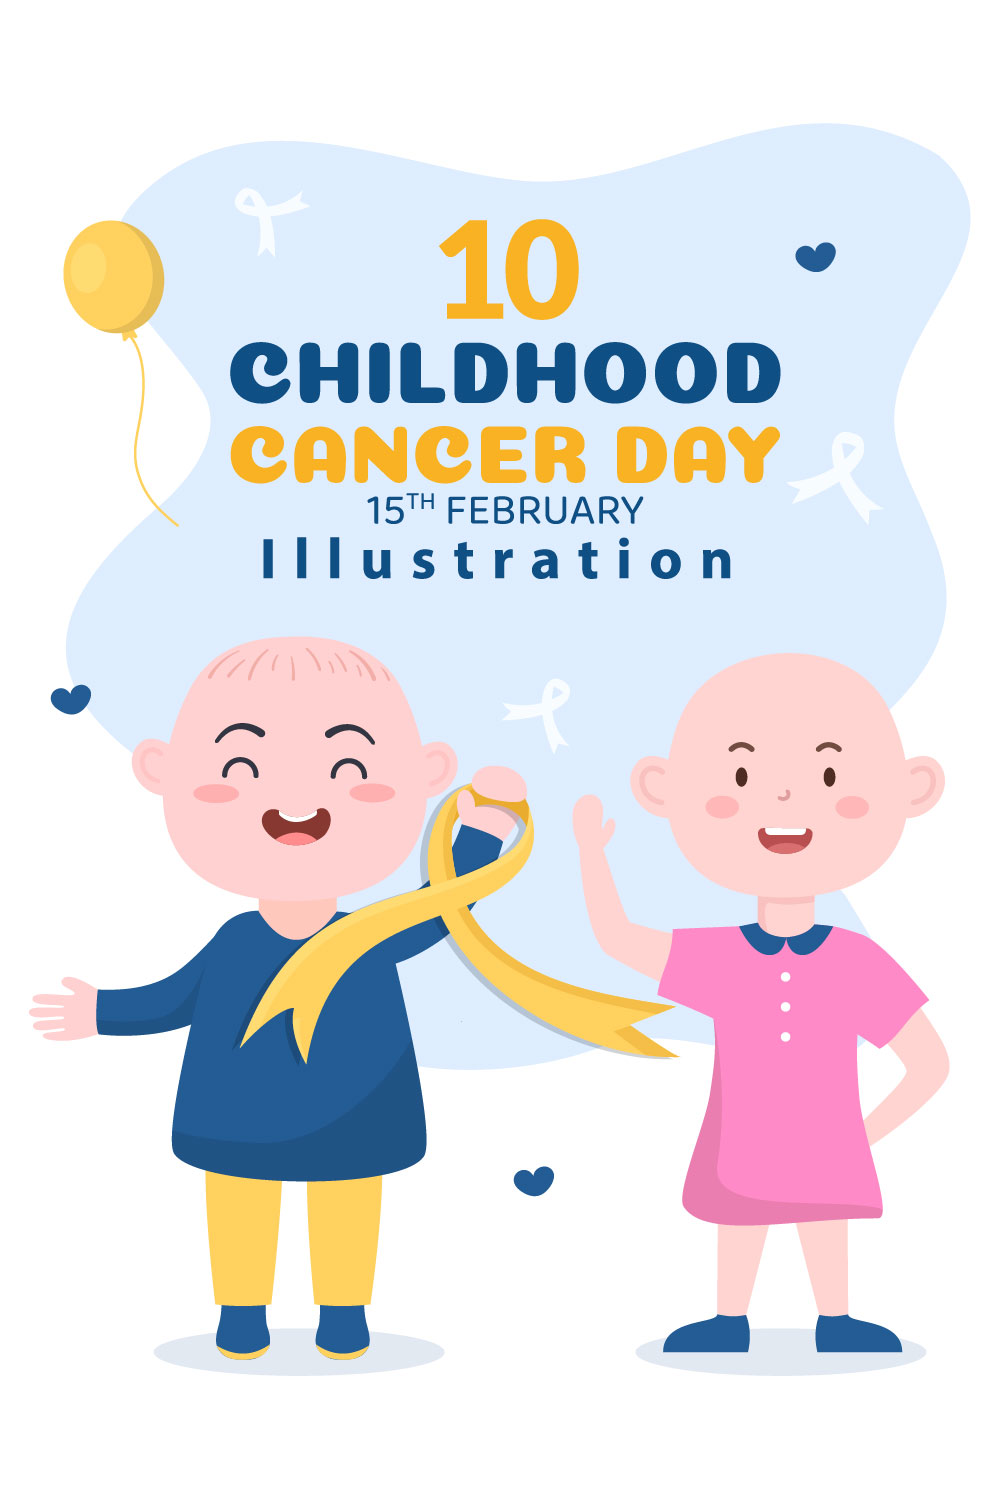 10 International Childhood Cancer Day Illustration pinterest image.